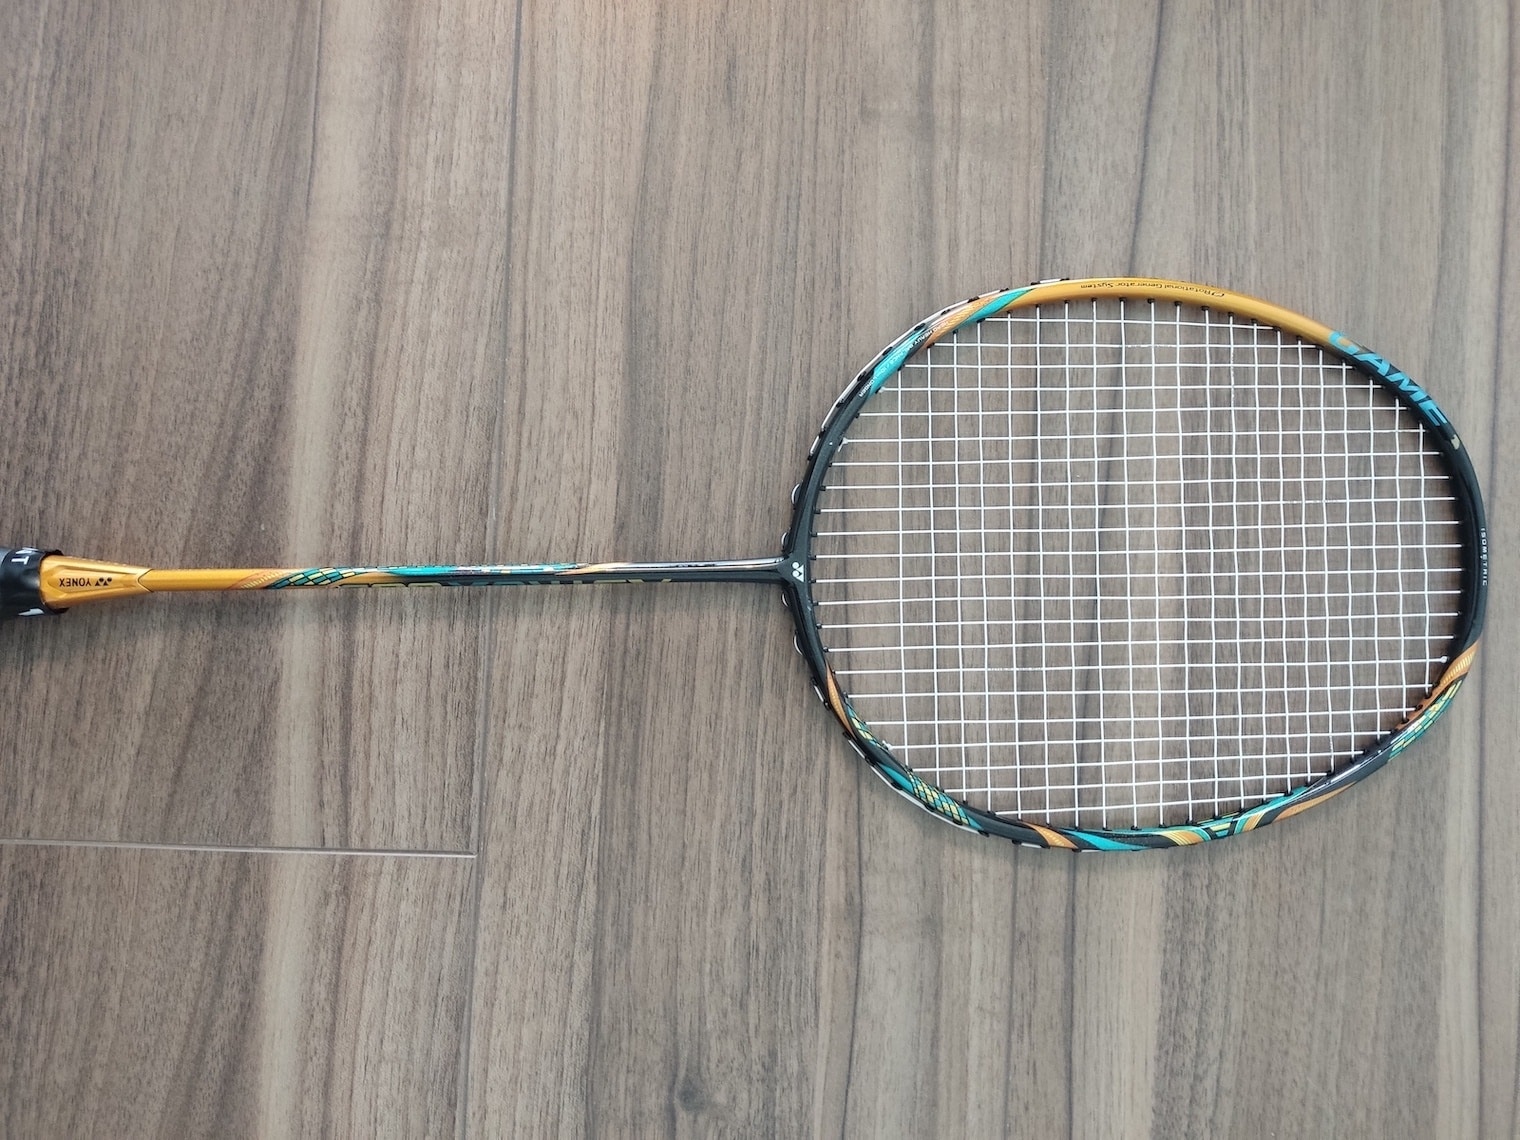 Yonex Badminton Racket Reviews